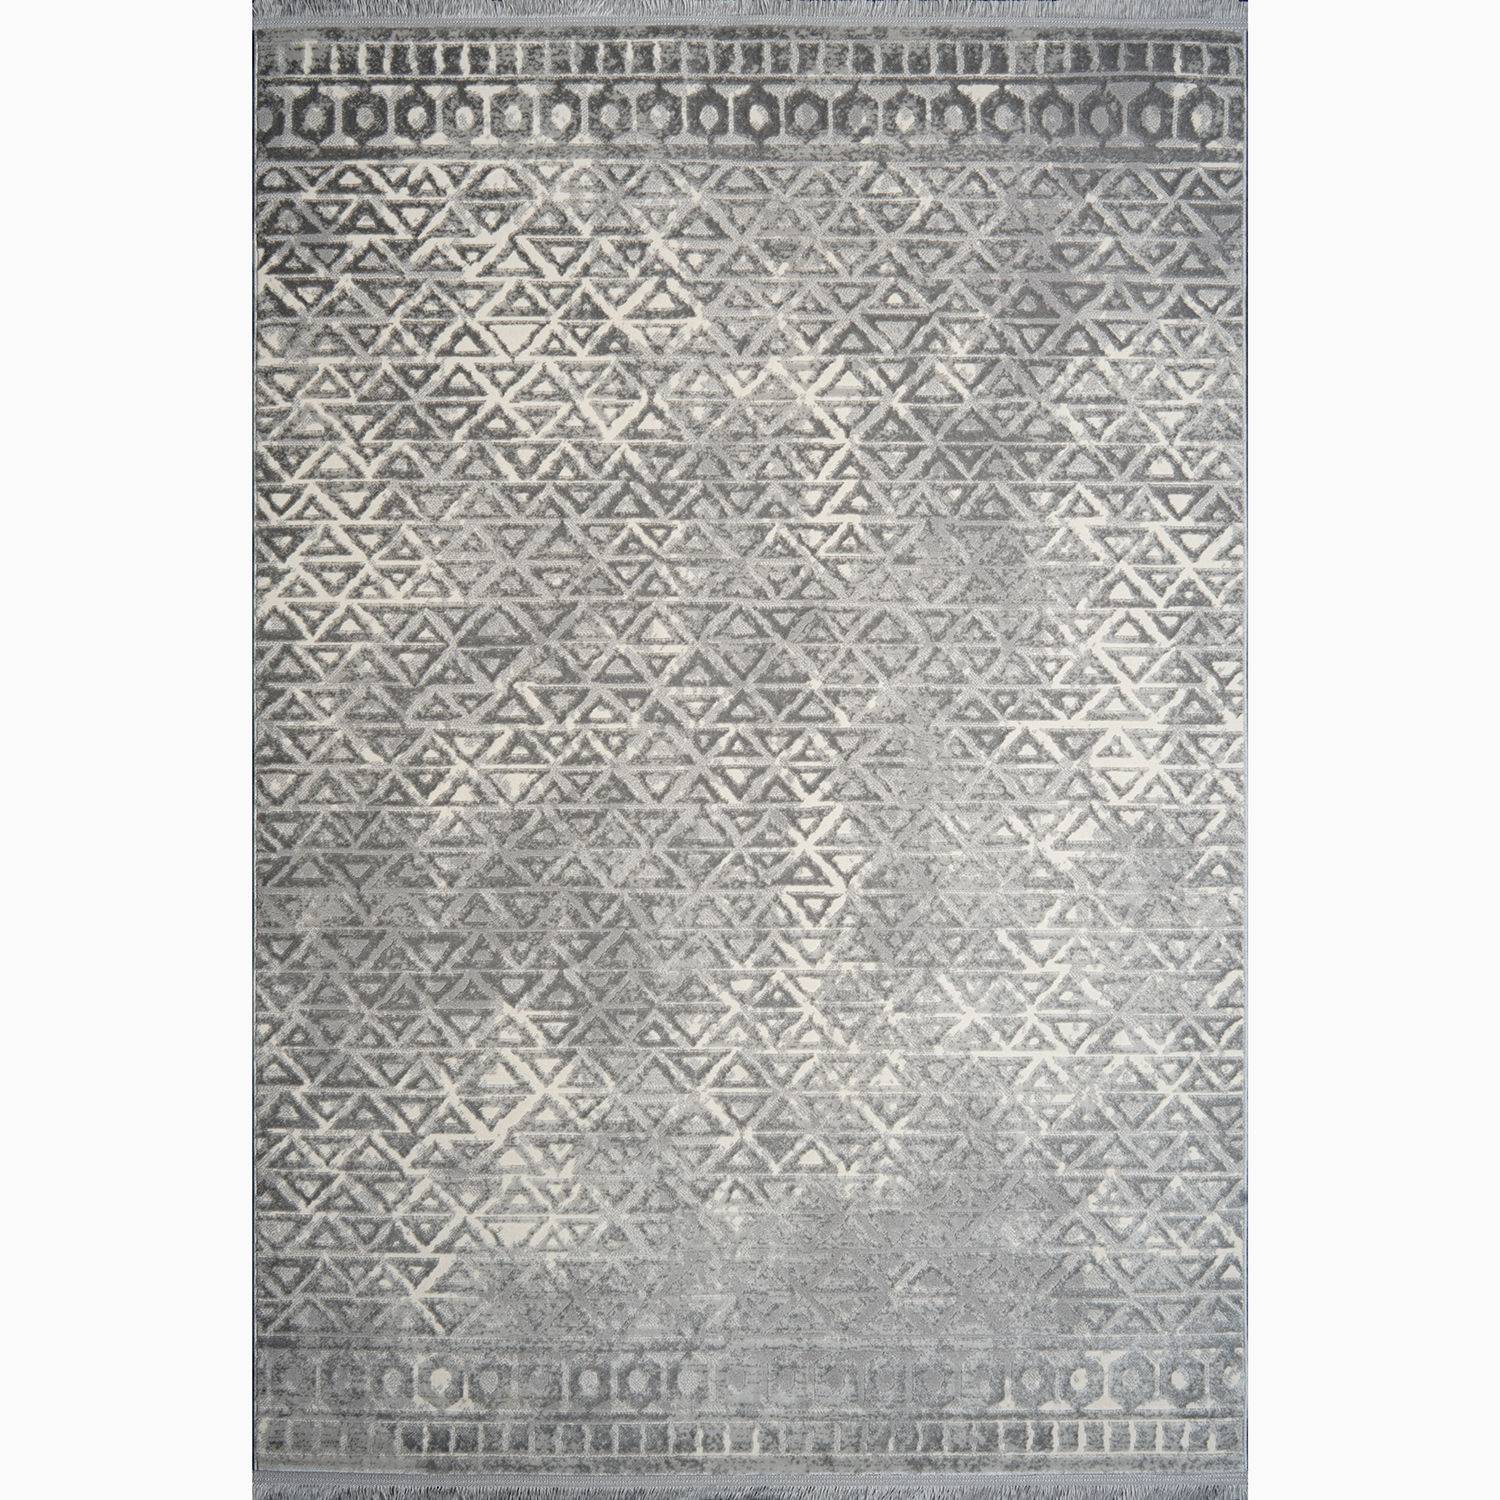 Ketuss Teppich 100x200cm Stoff Geometrisches Muster Grau